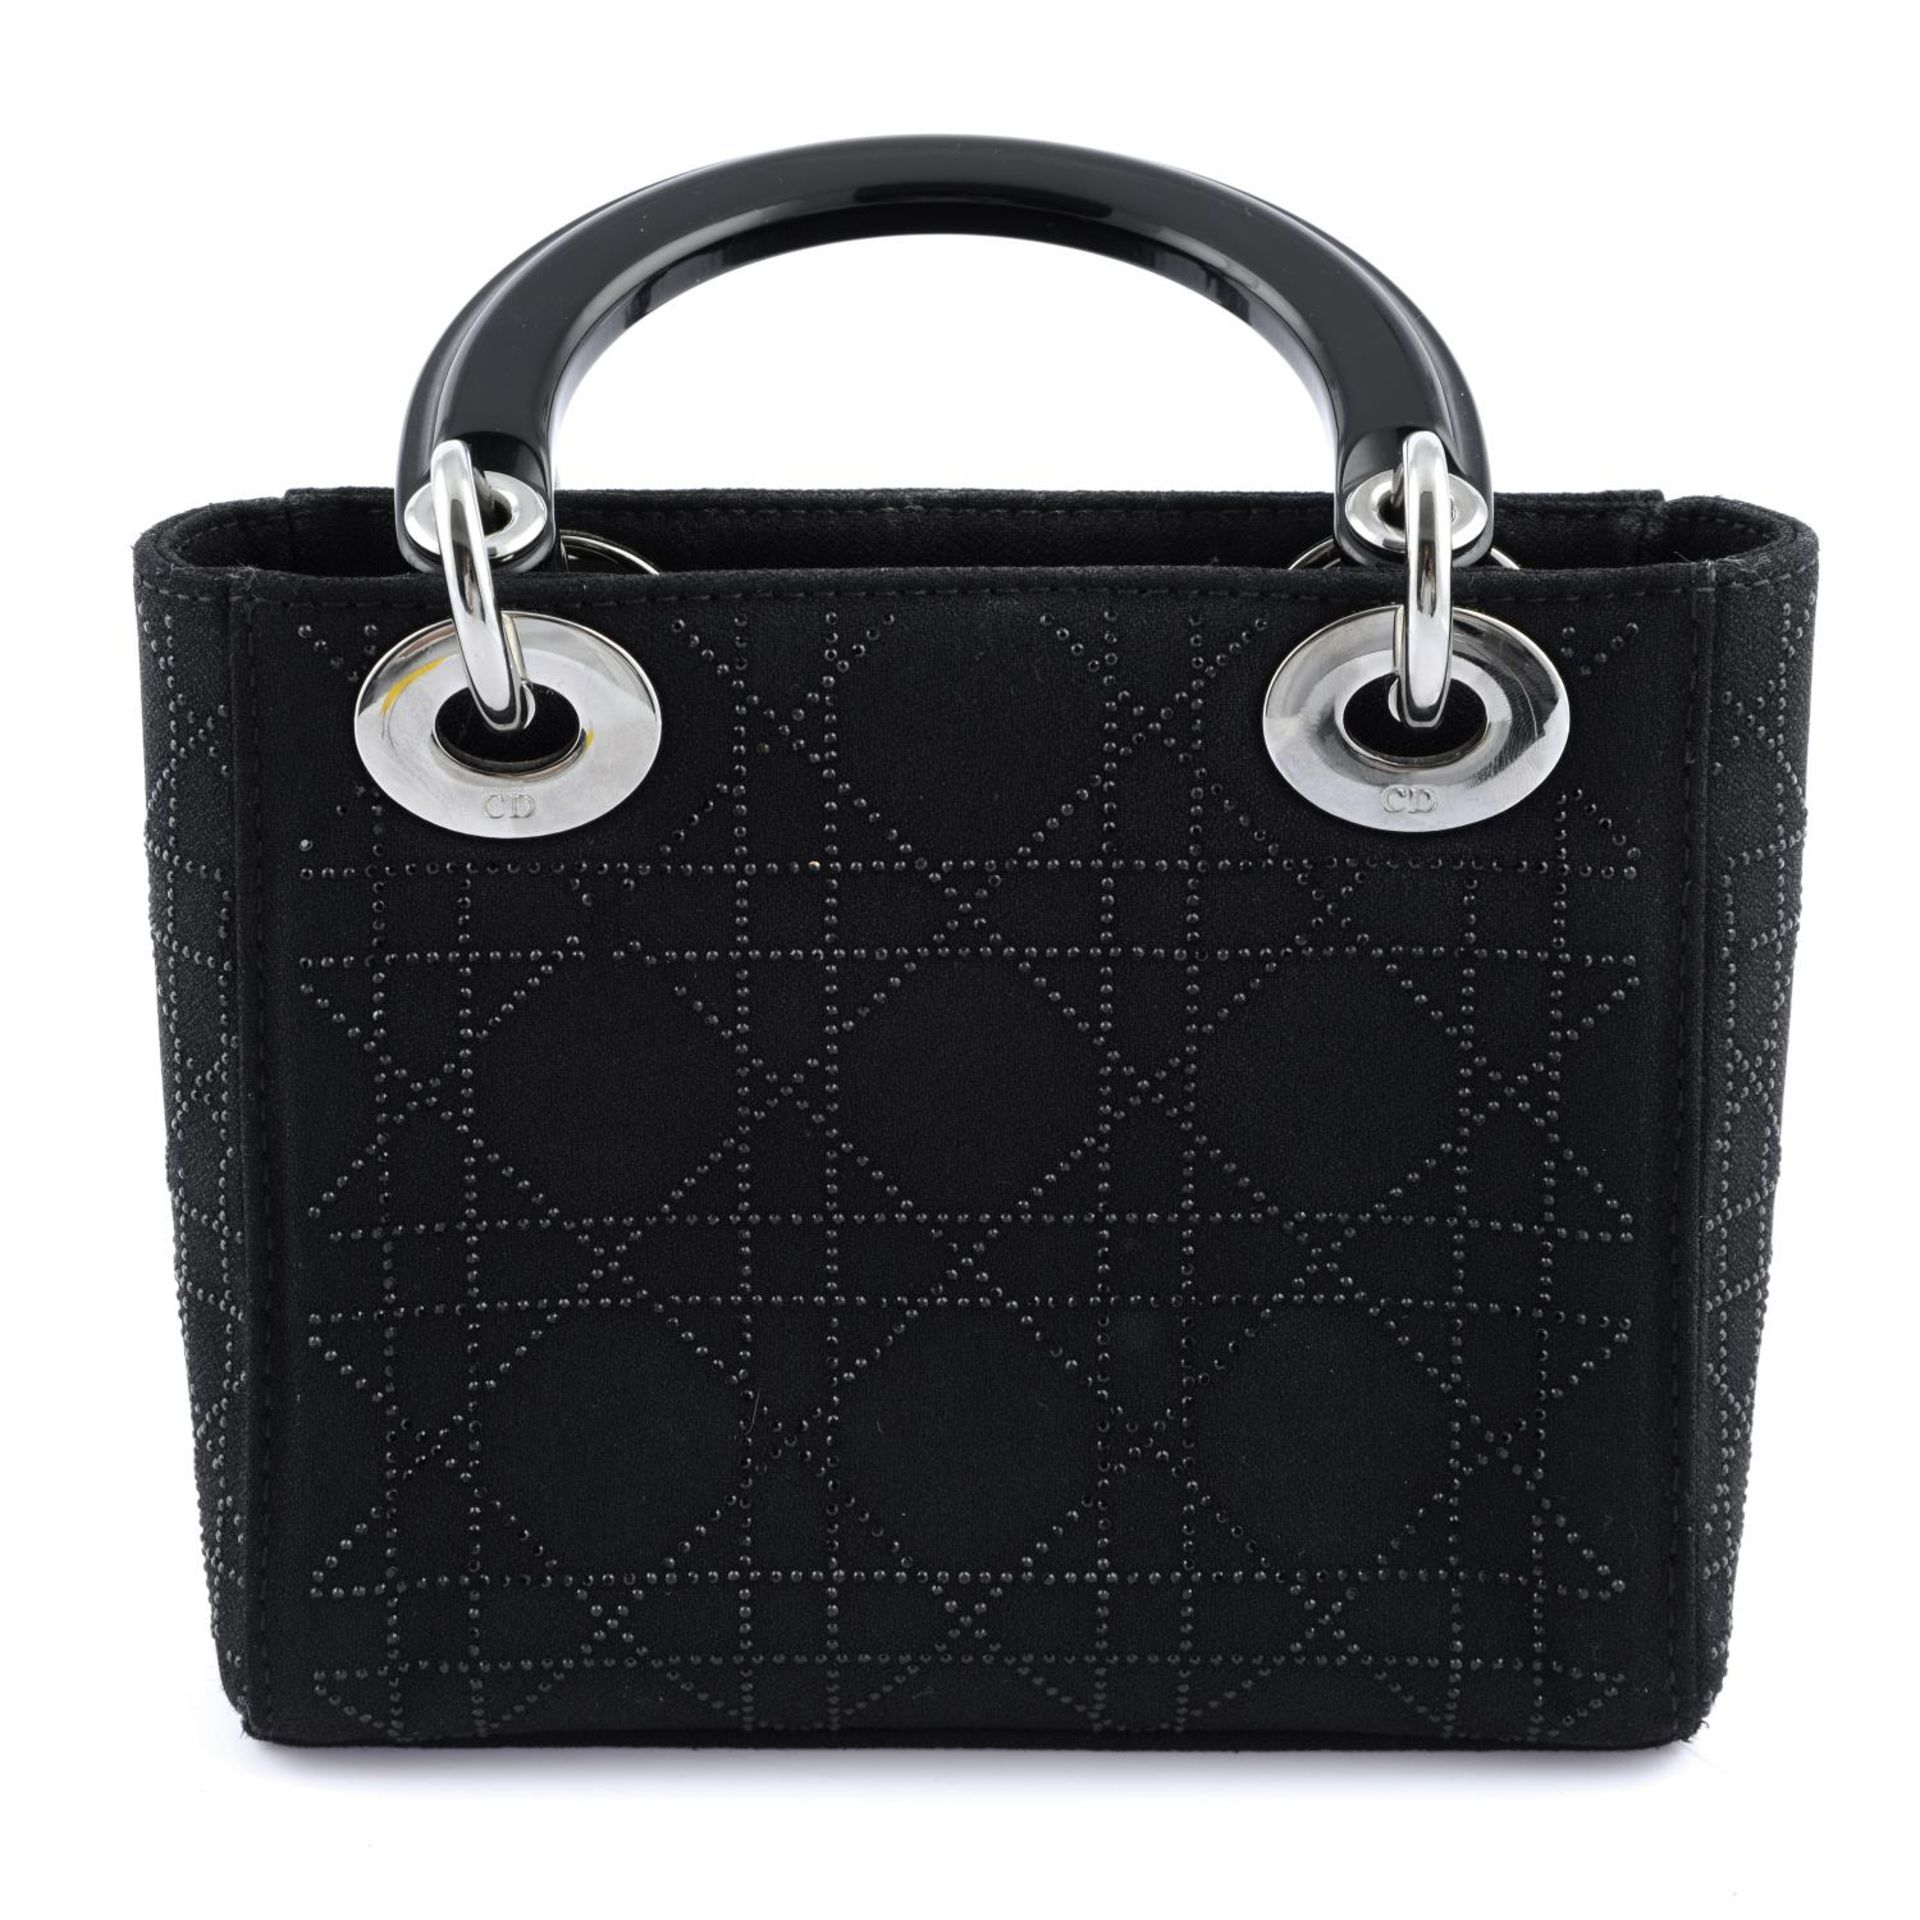 CHRISTIAN DIOR - a limited edition Mini Lady Dior handbag. - Bild 2 aus 4